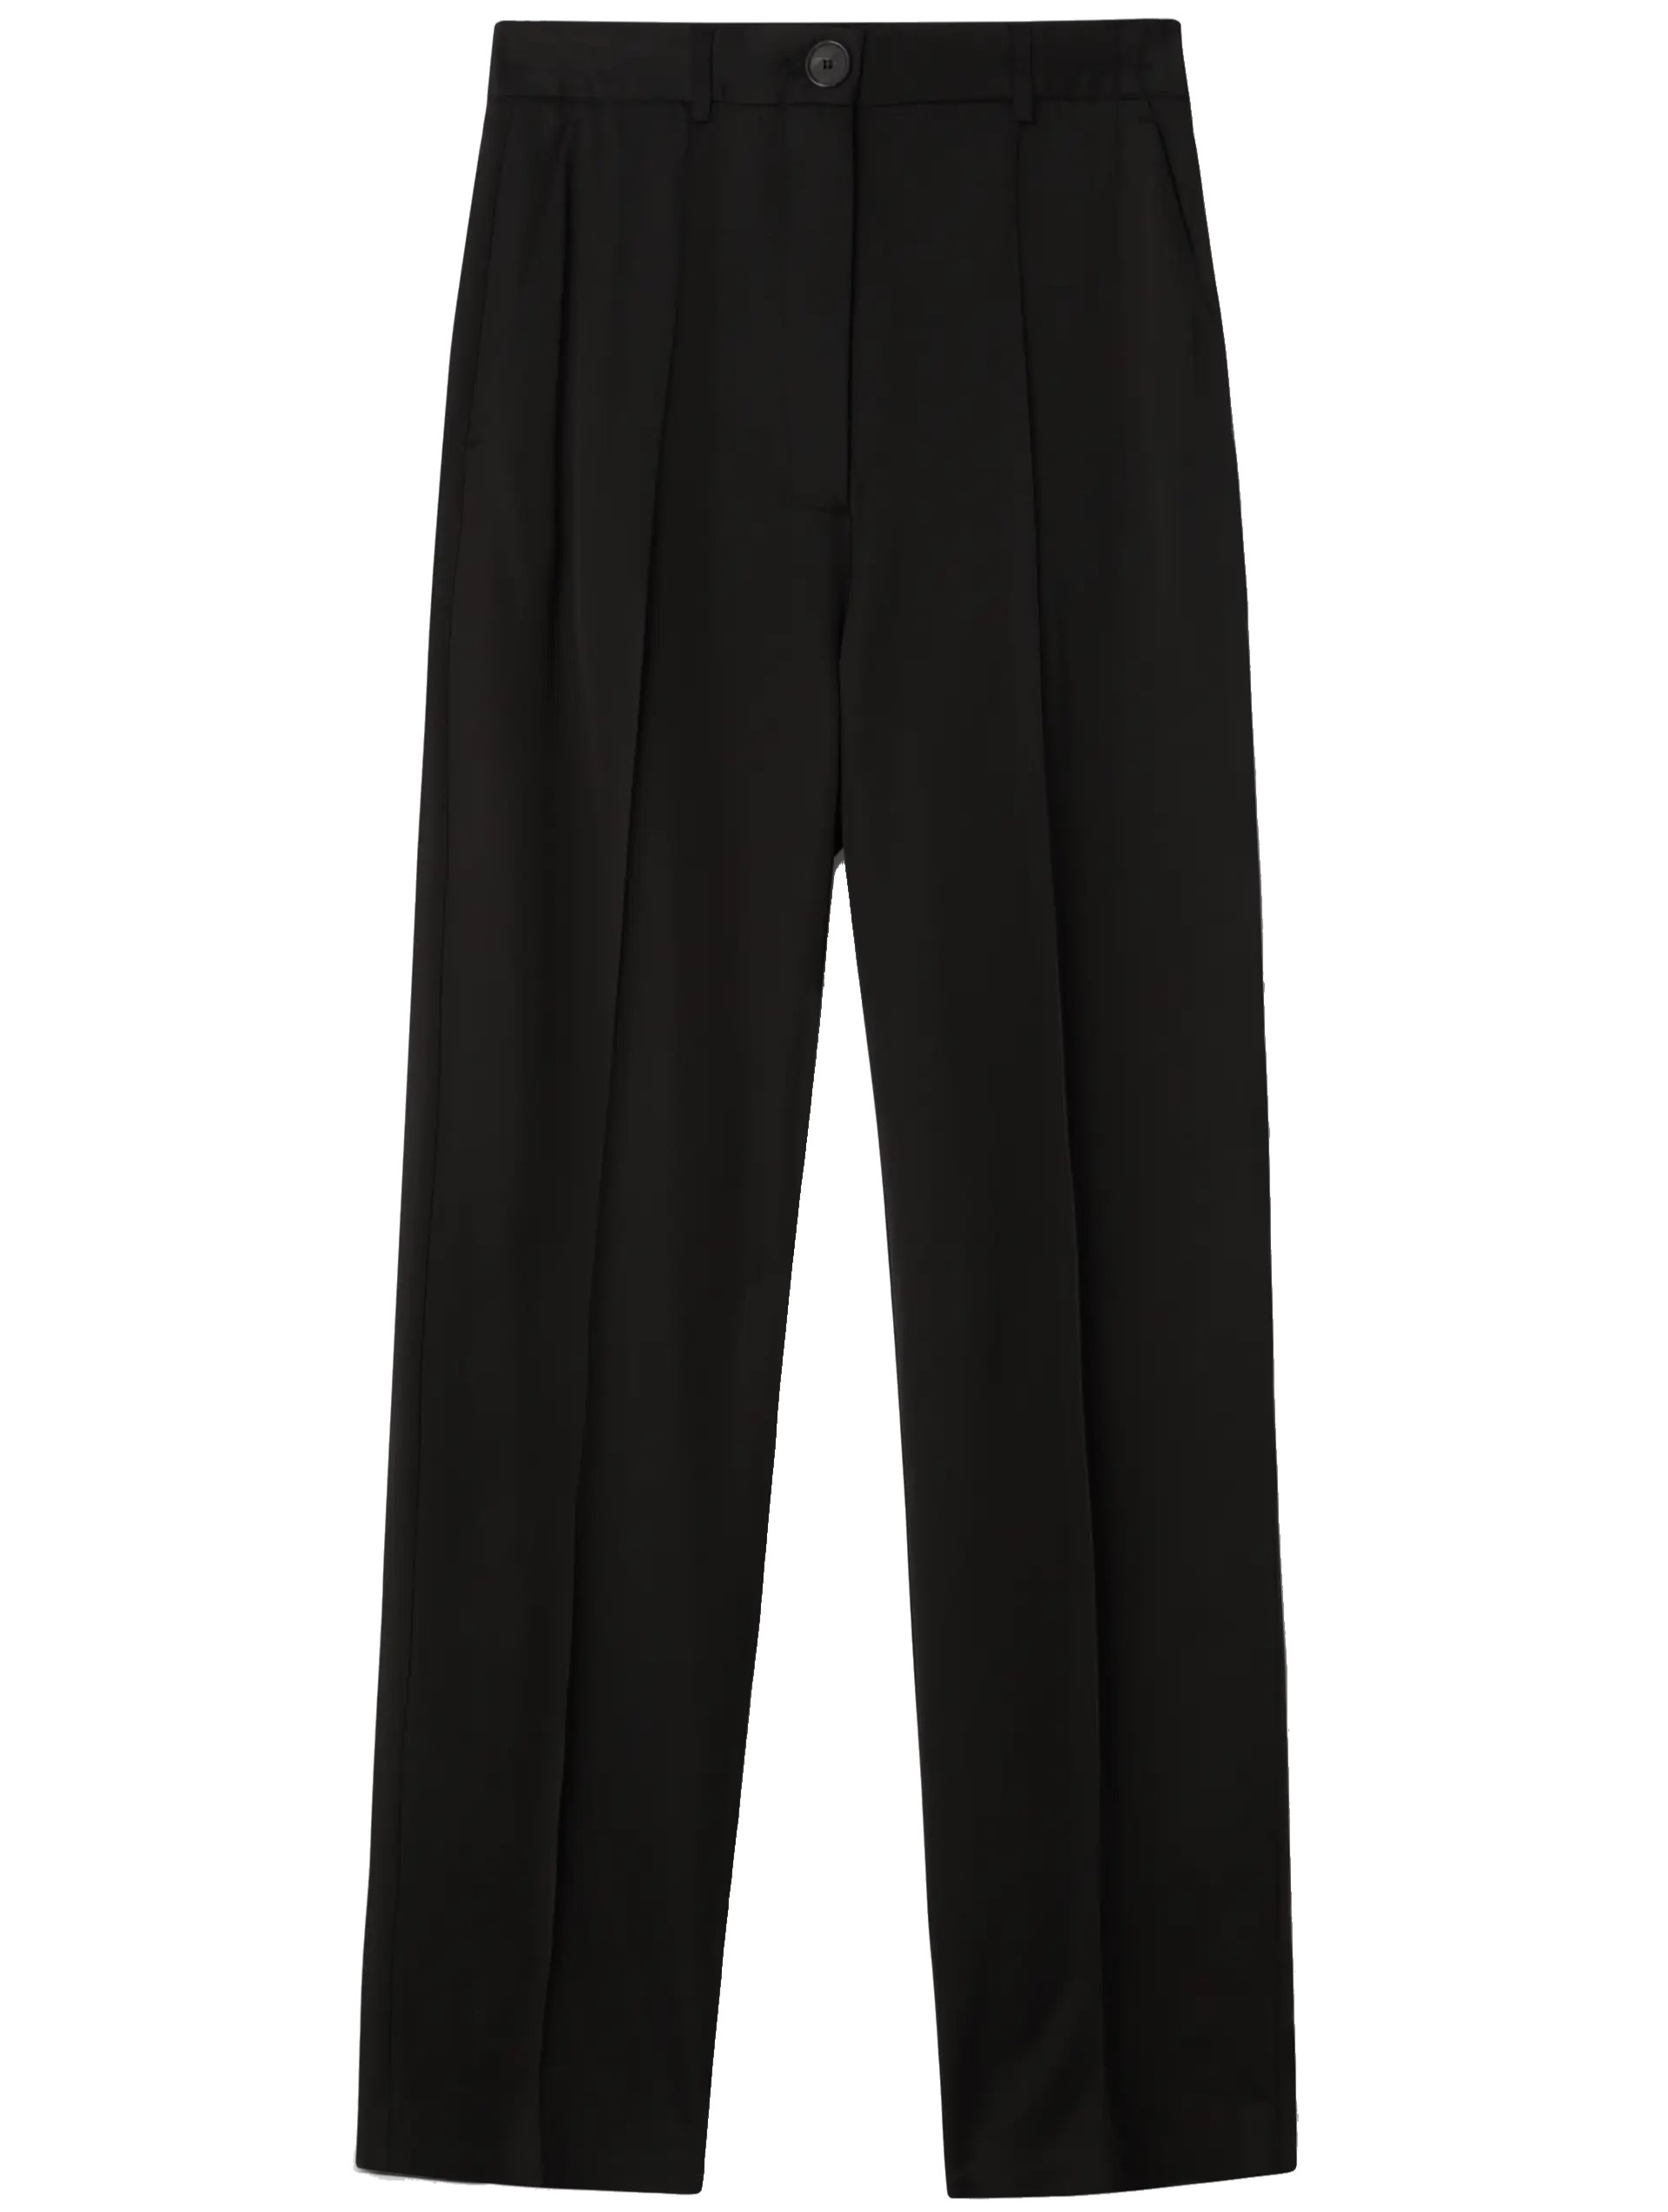 DAGMAR Slim Suit Pant in Shiny Black 34